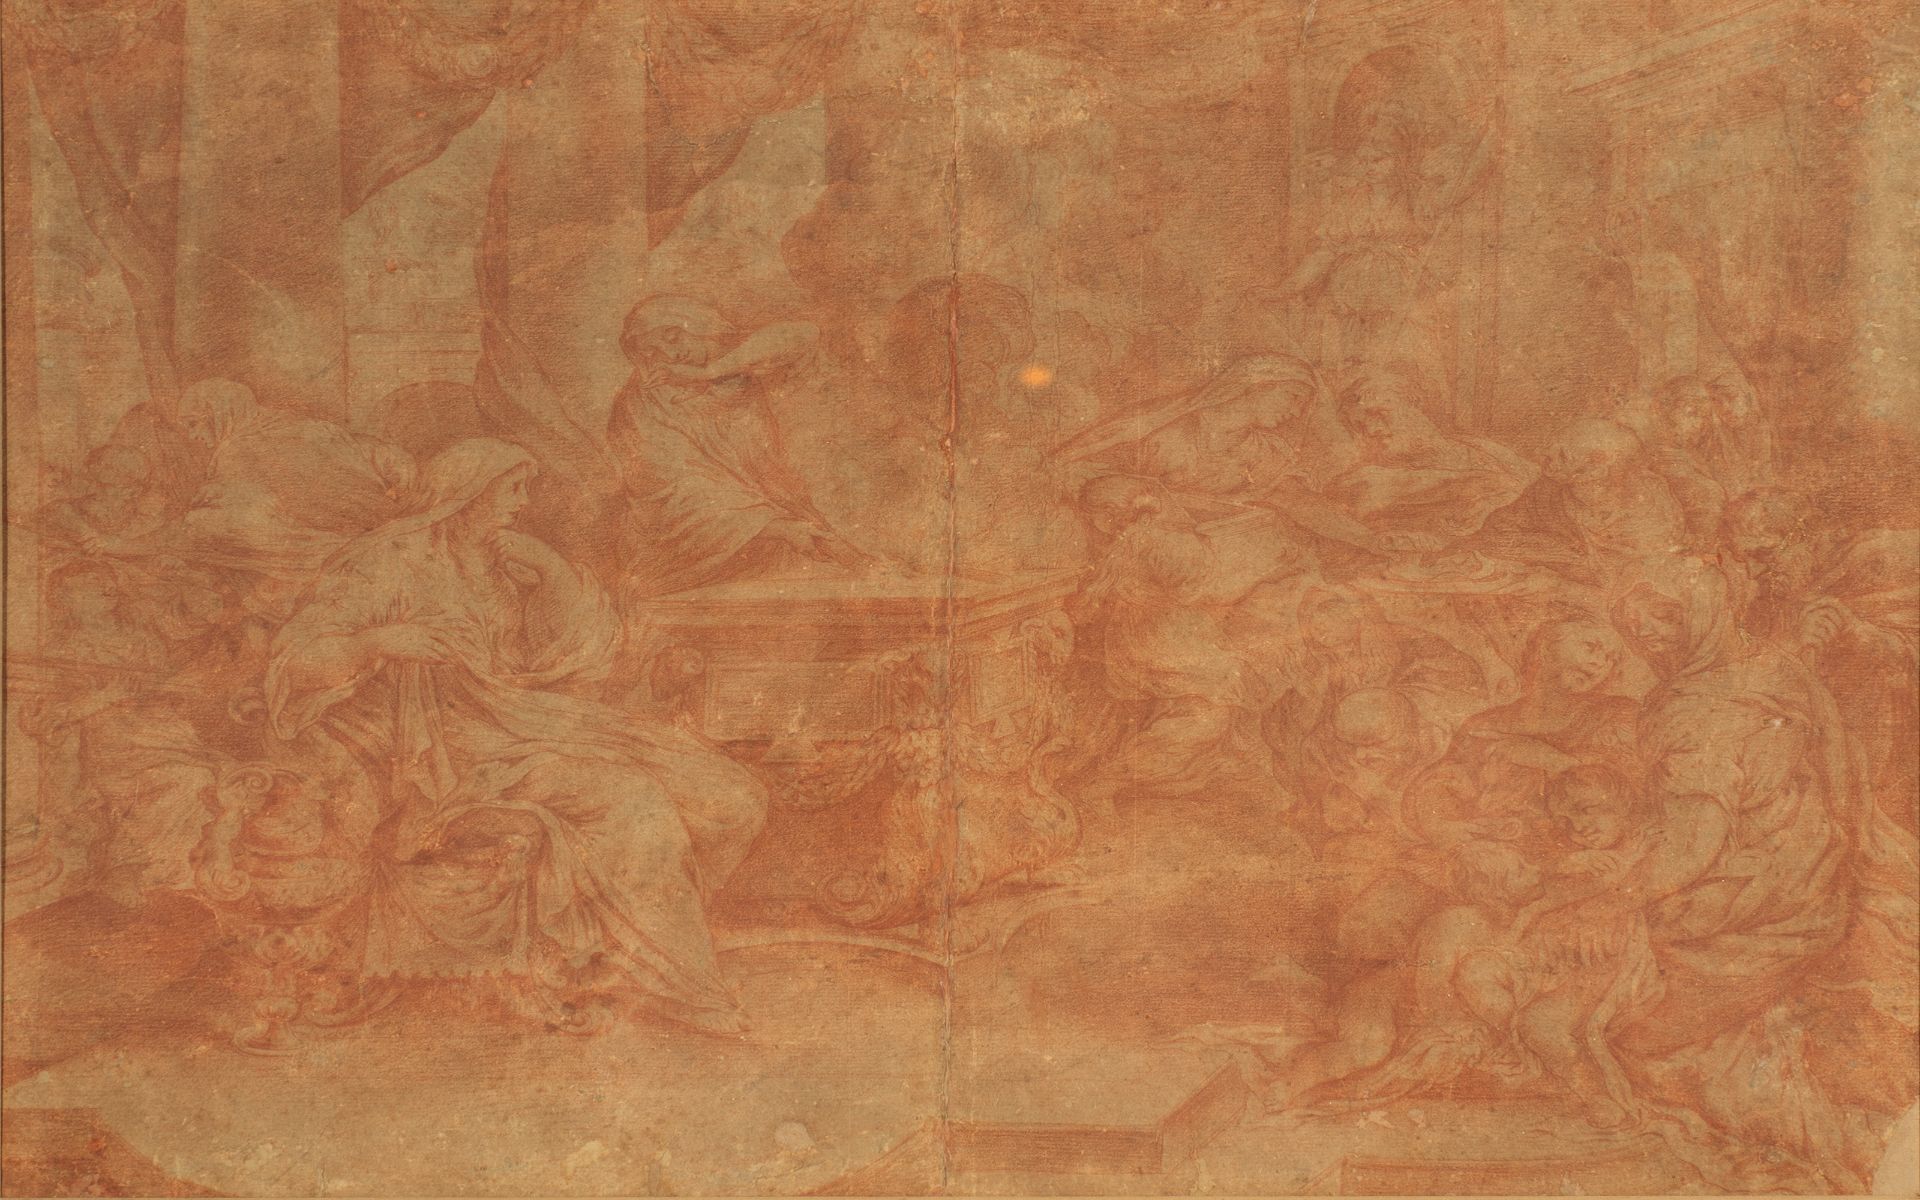 Circle of Pietro da Cortona, sanguine on paper, 17th-18th century Italian school